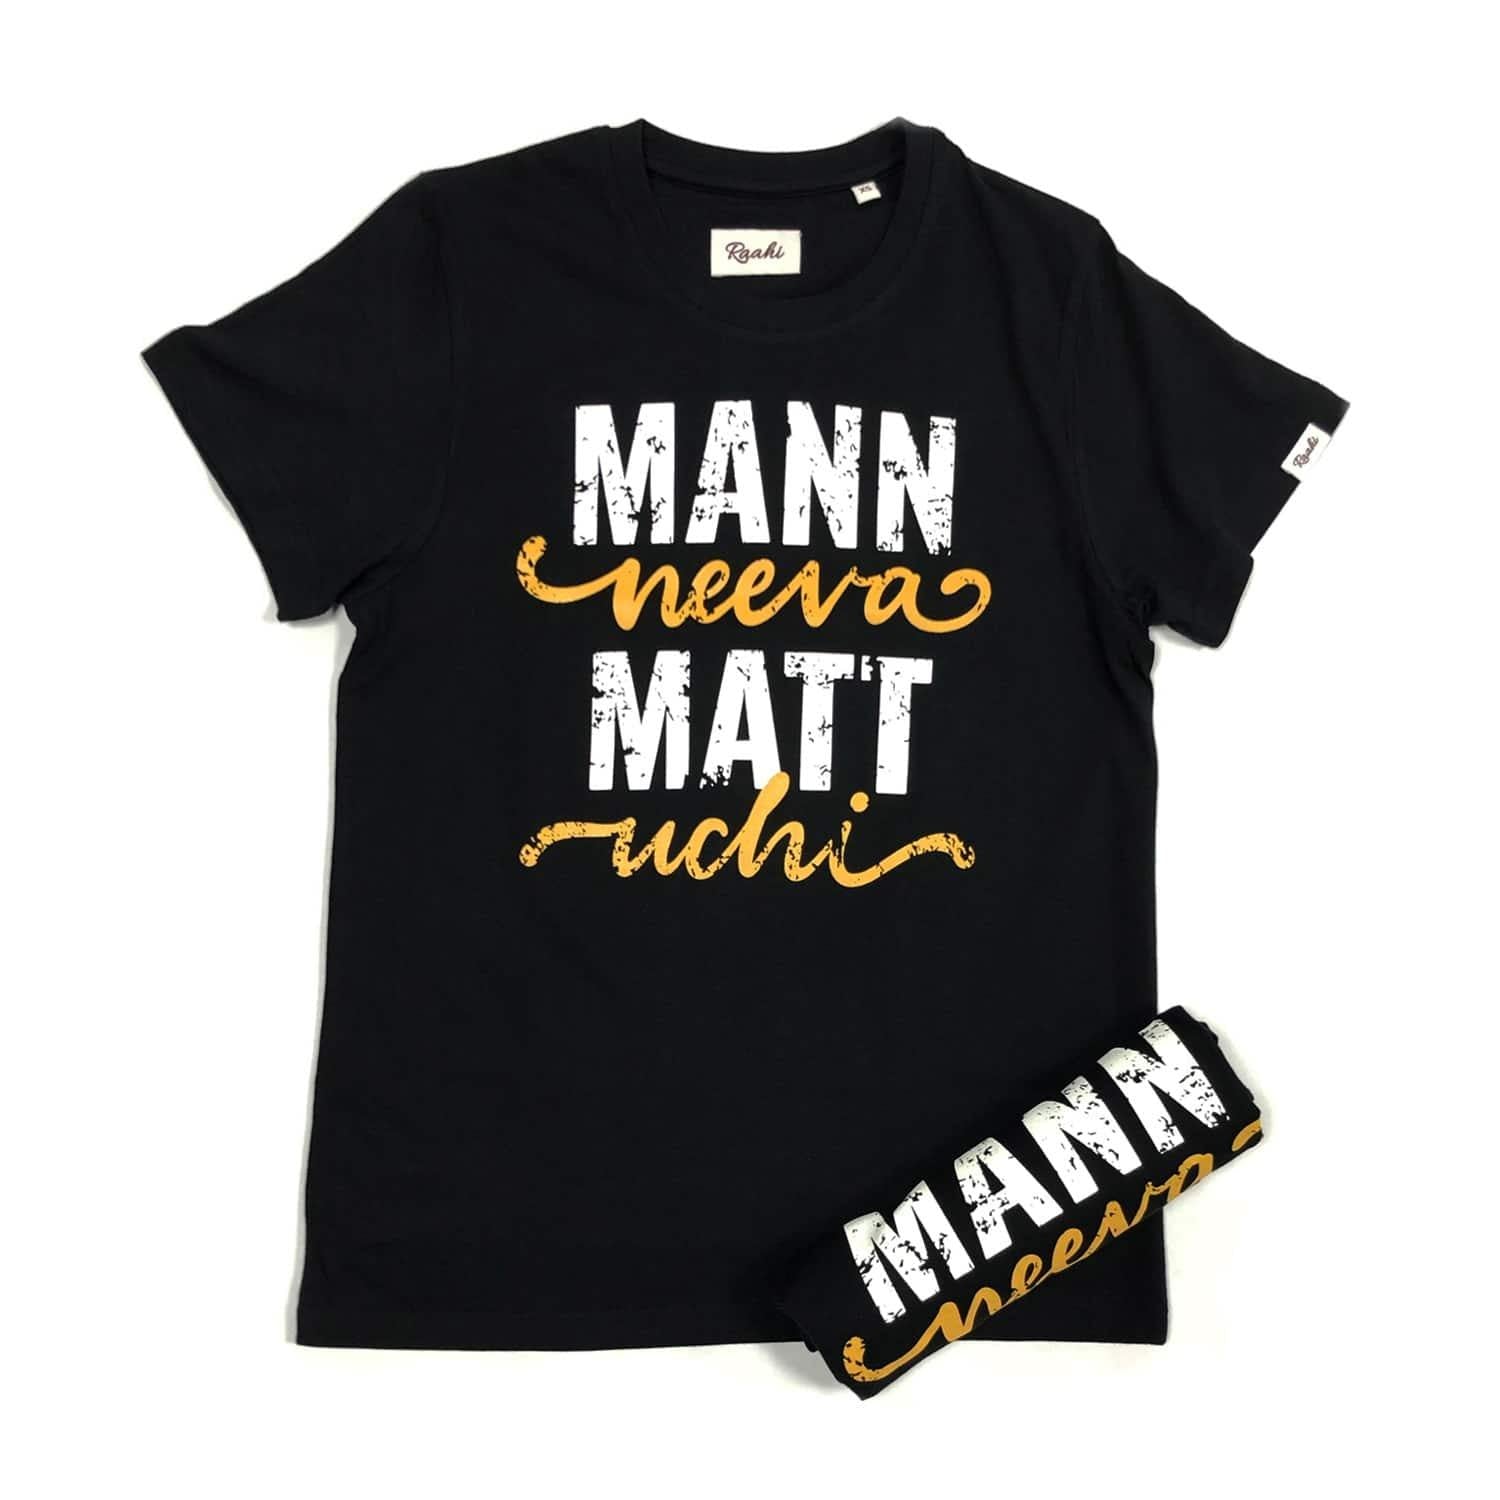 Mann Neeva Matt Uchi - Black T-Shirt - Raahi